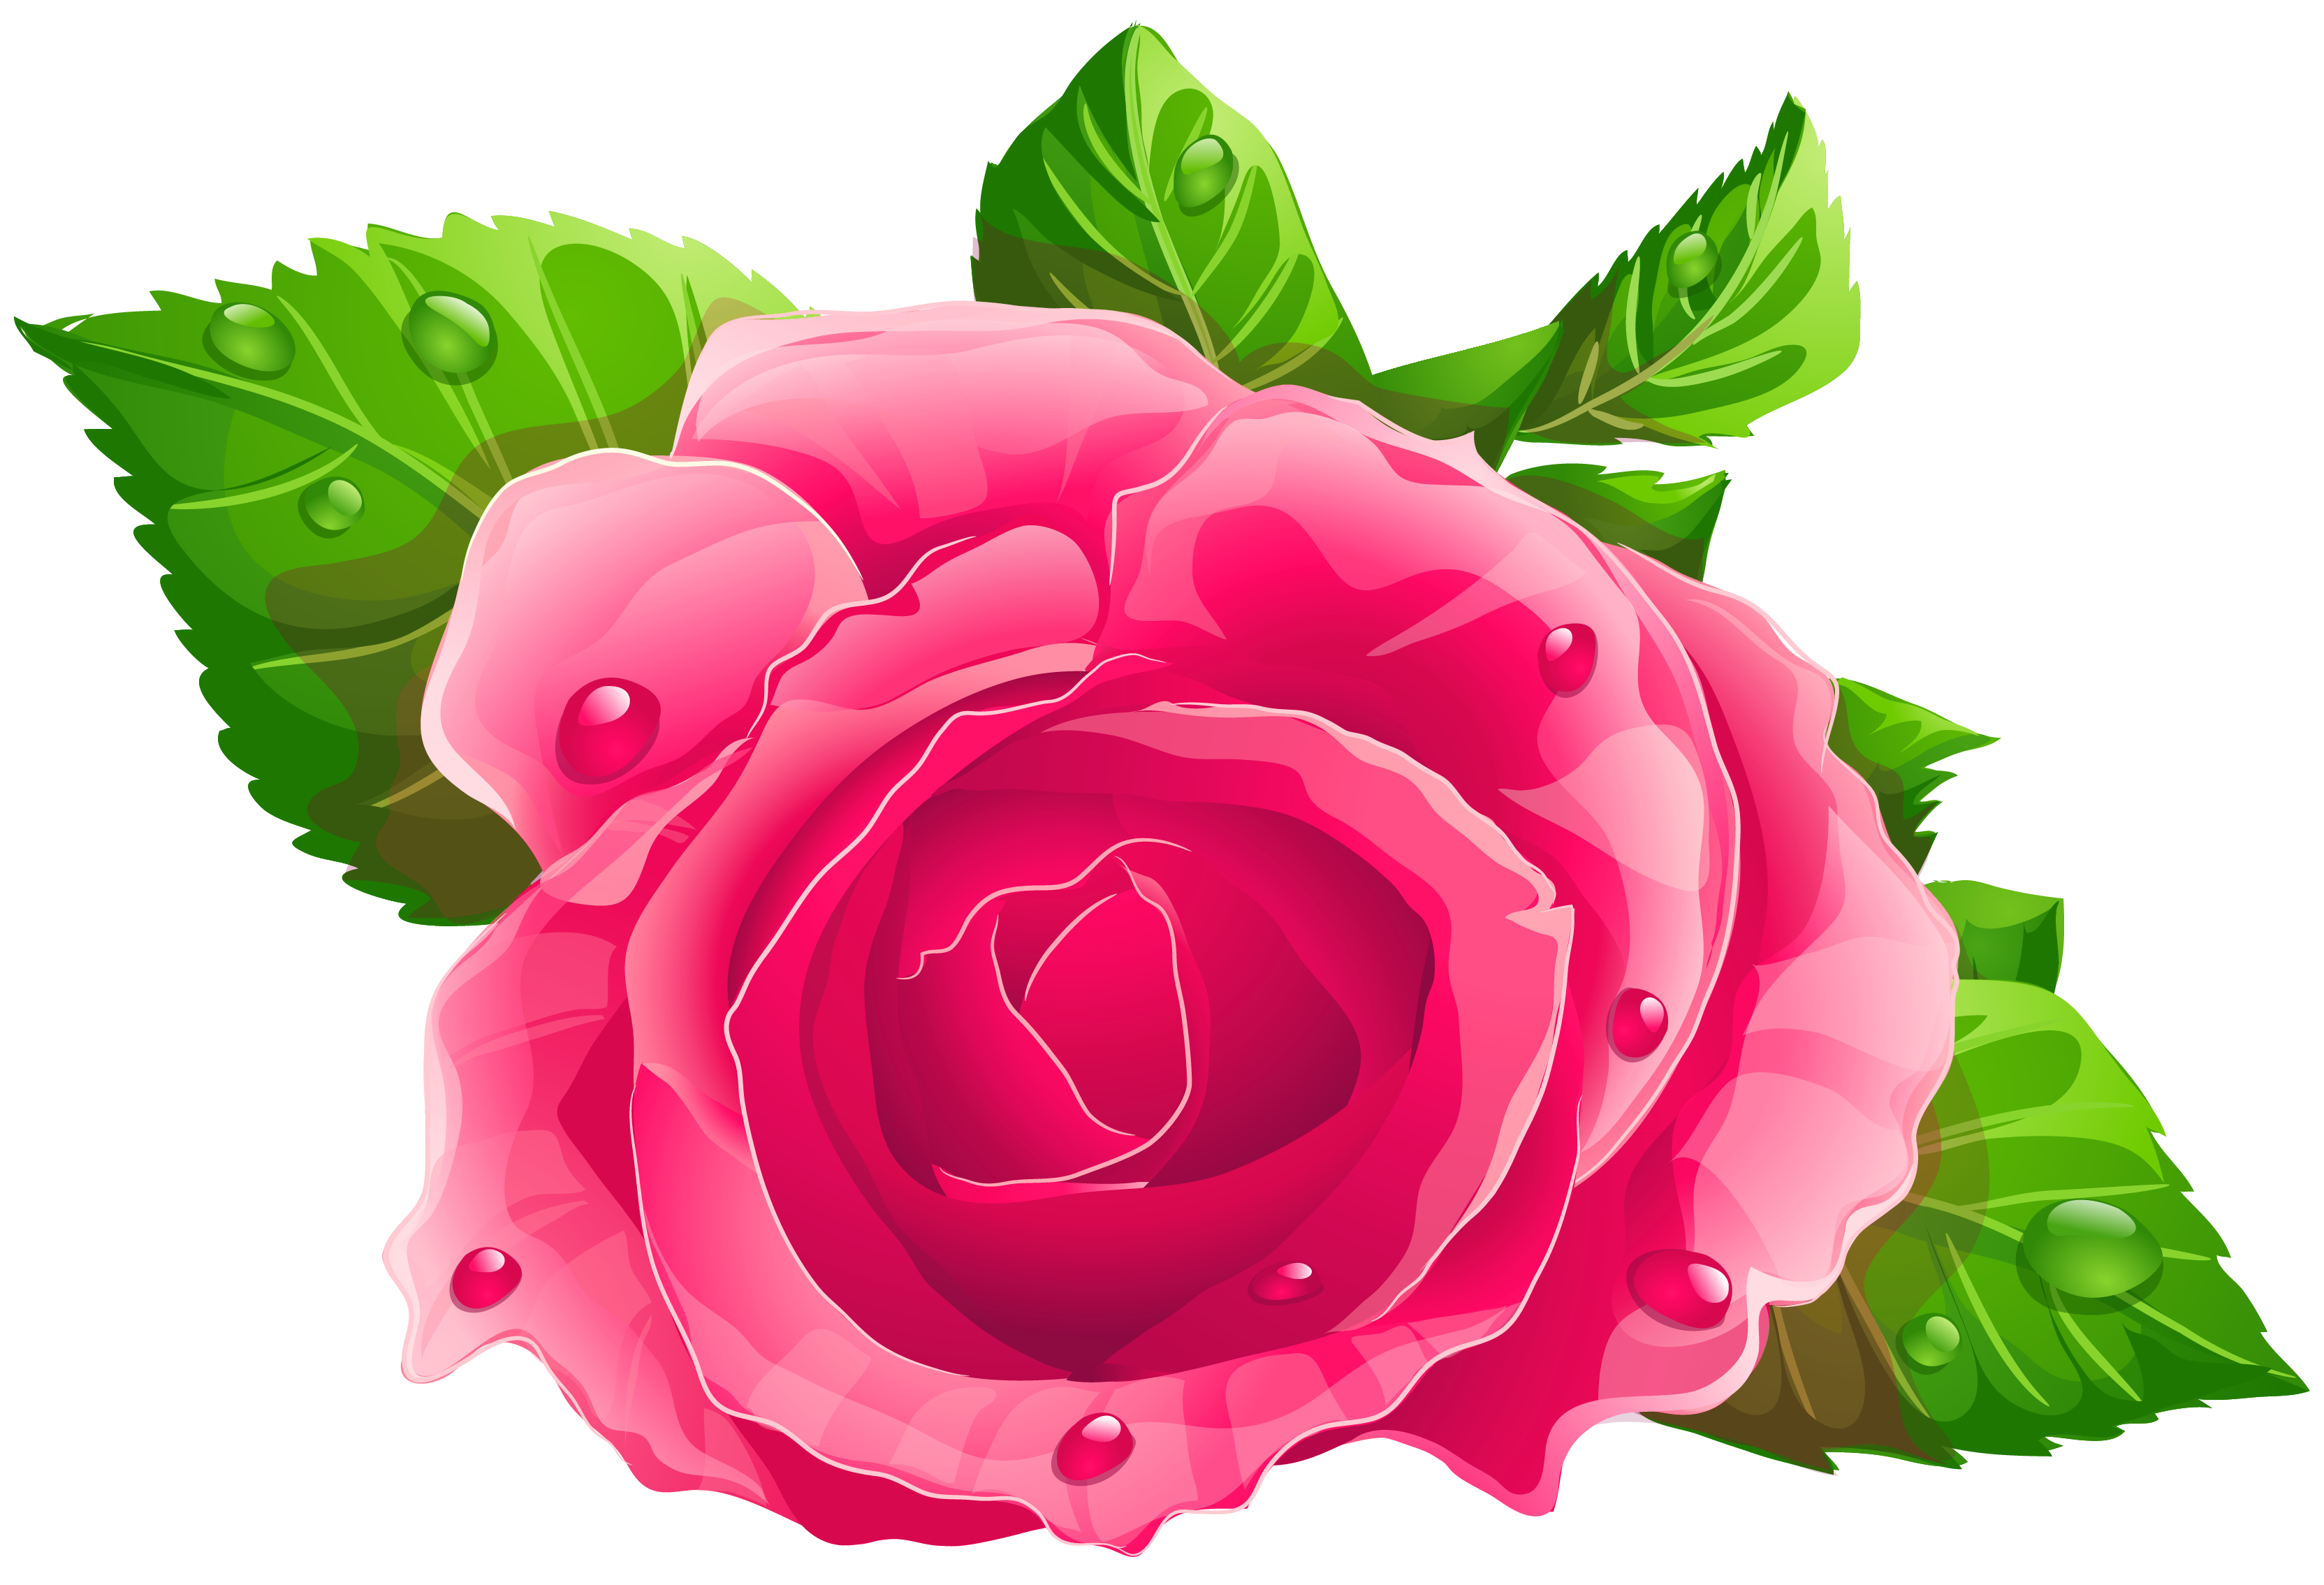 Beautiful pink rose clipart .